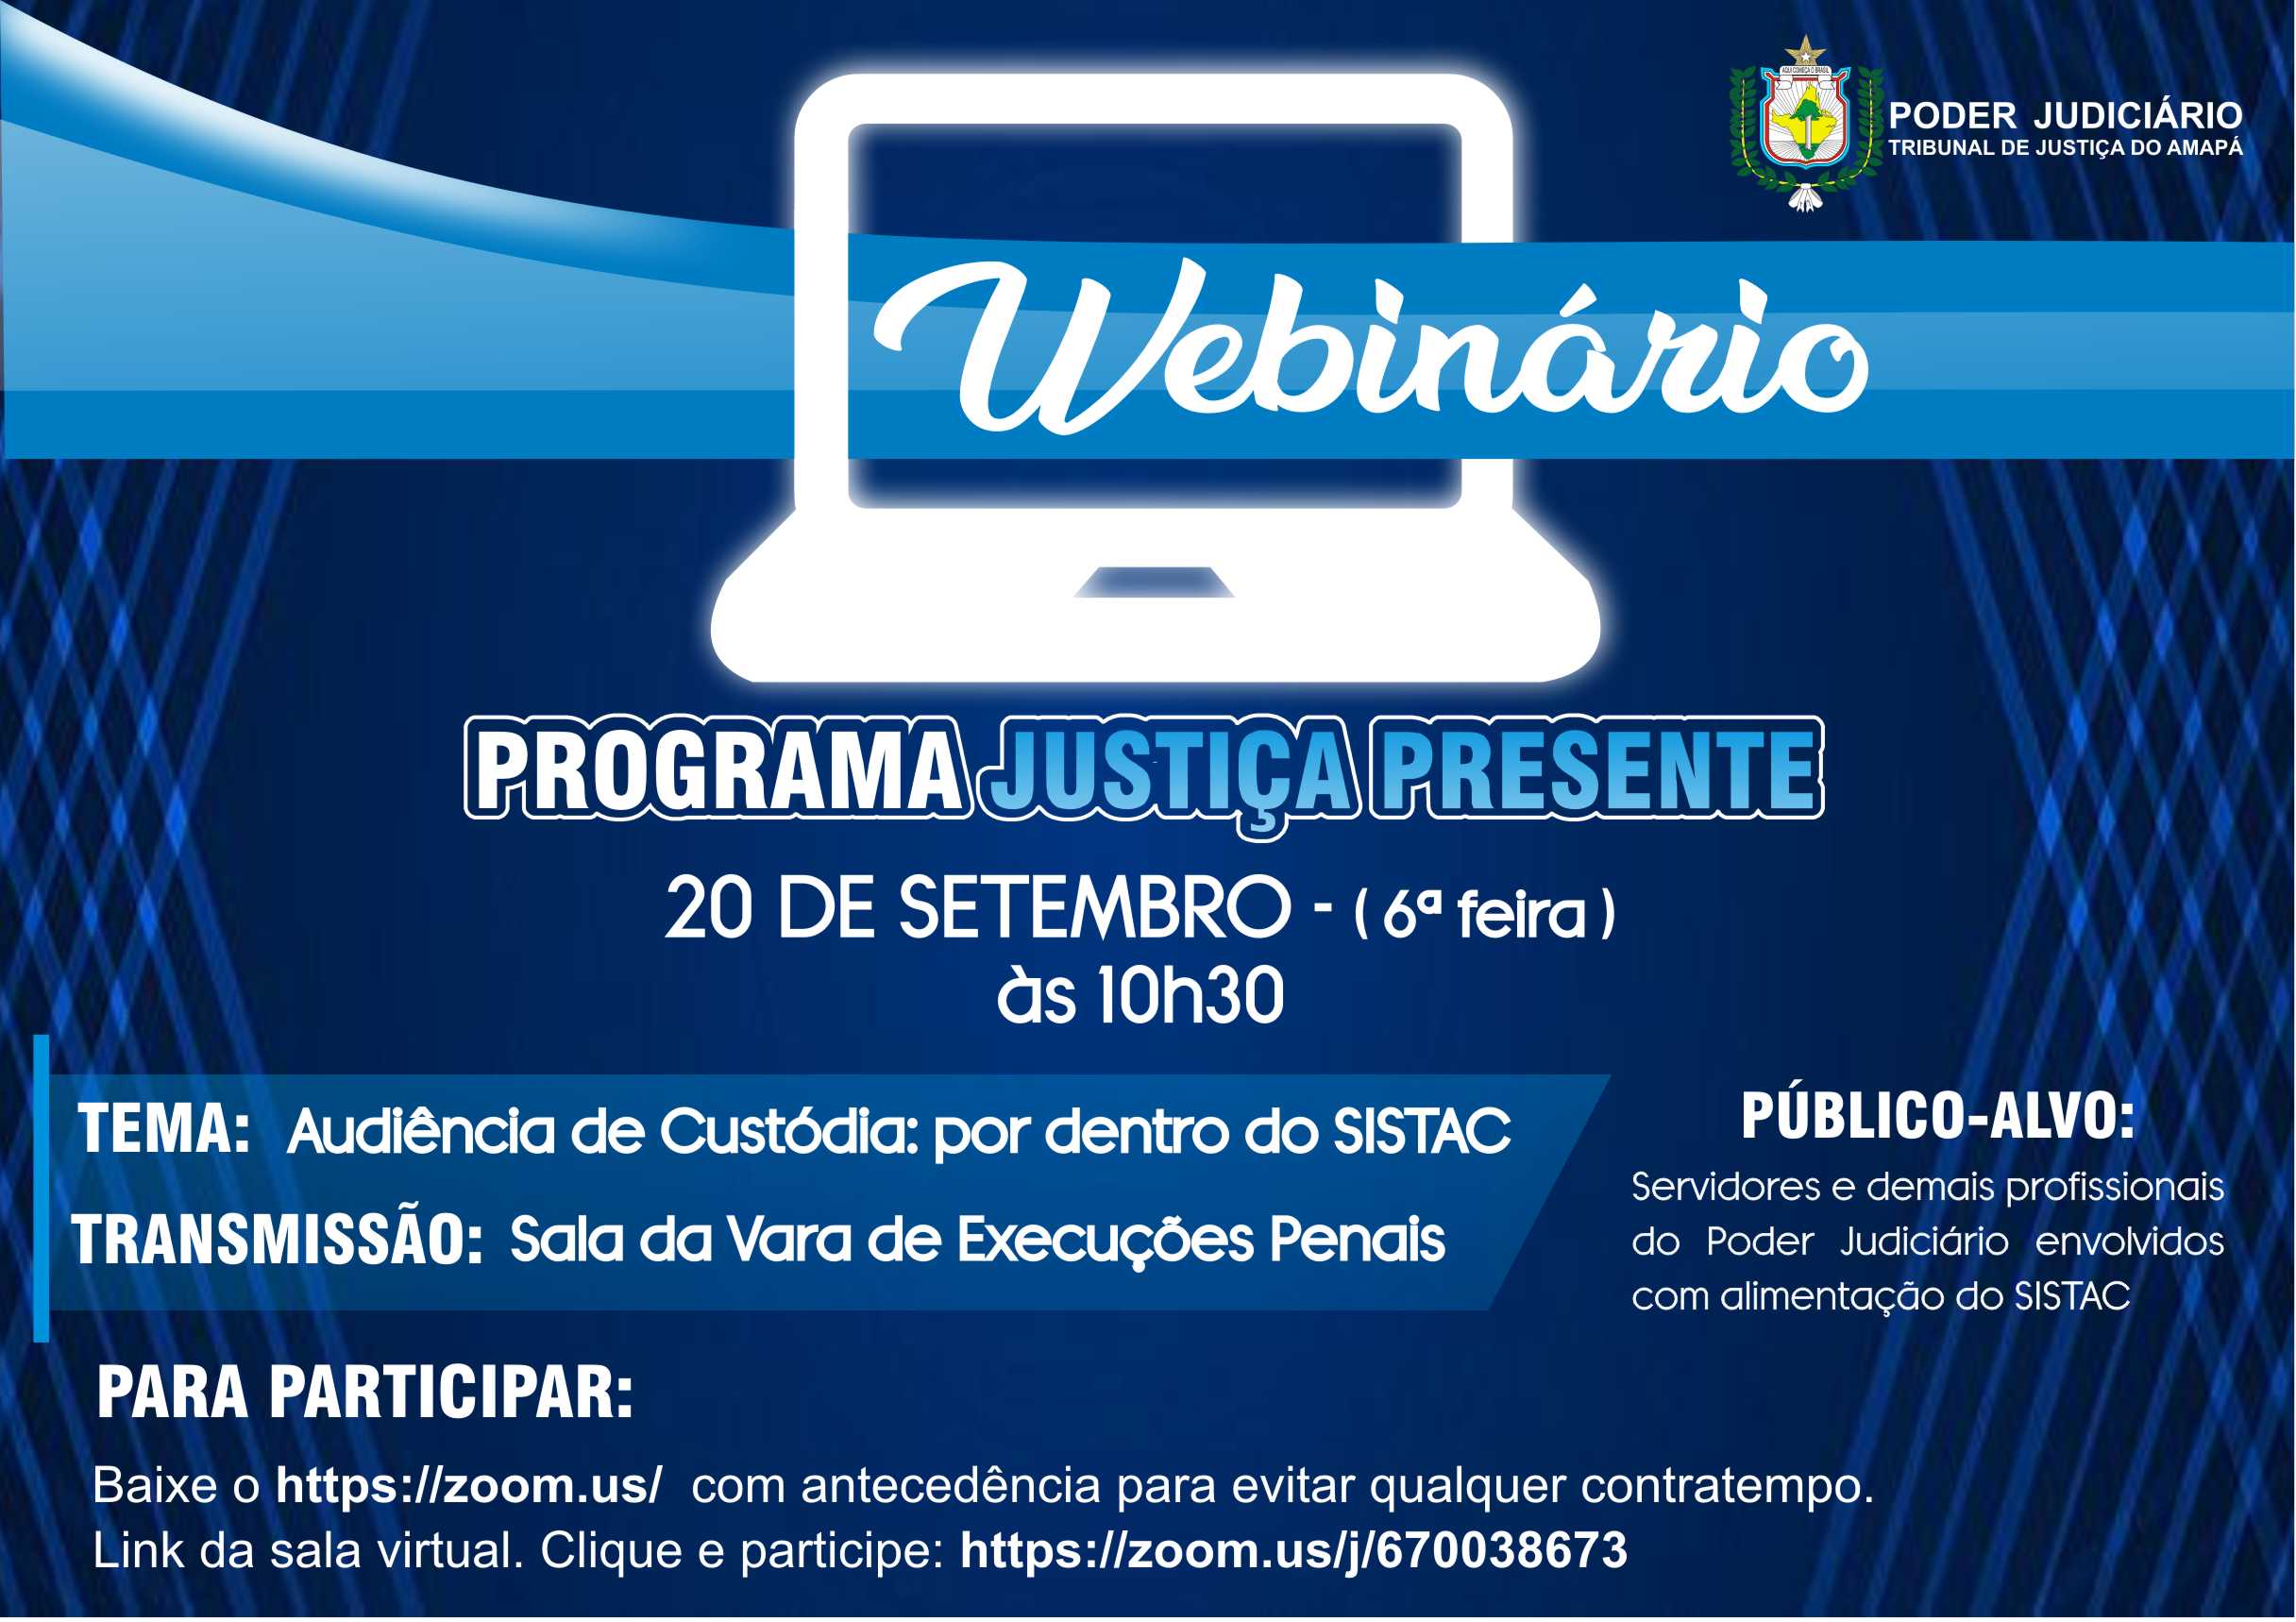 WEBNARIO PROGRAMA JUSTIÇA PRESENTE.jpg